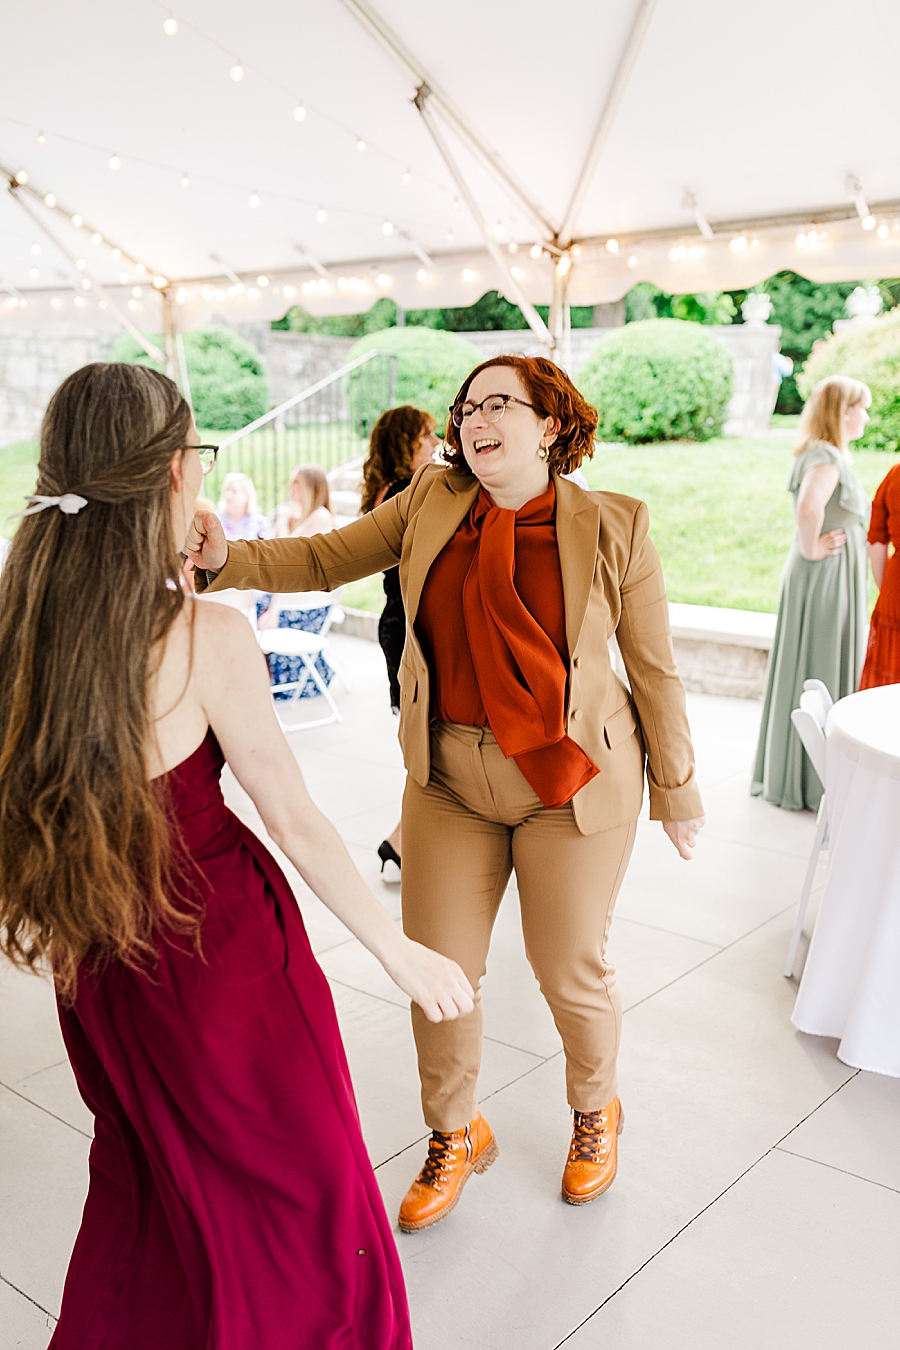 dancing at kincaid house wedding reception